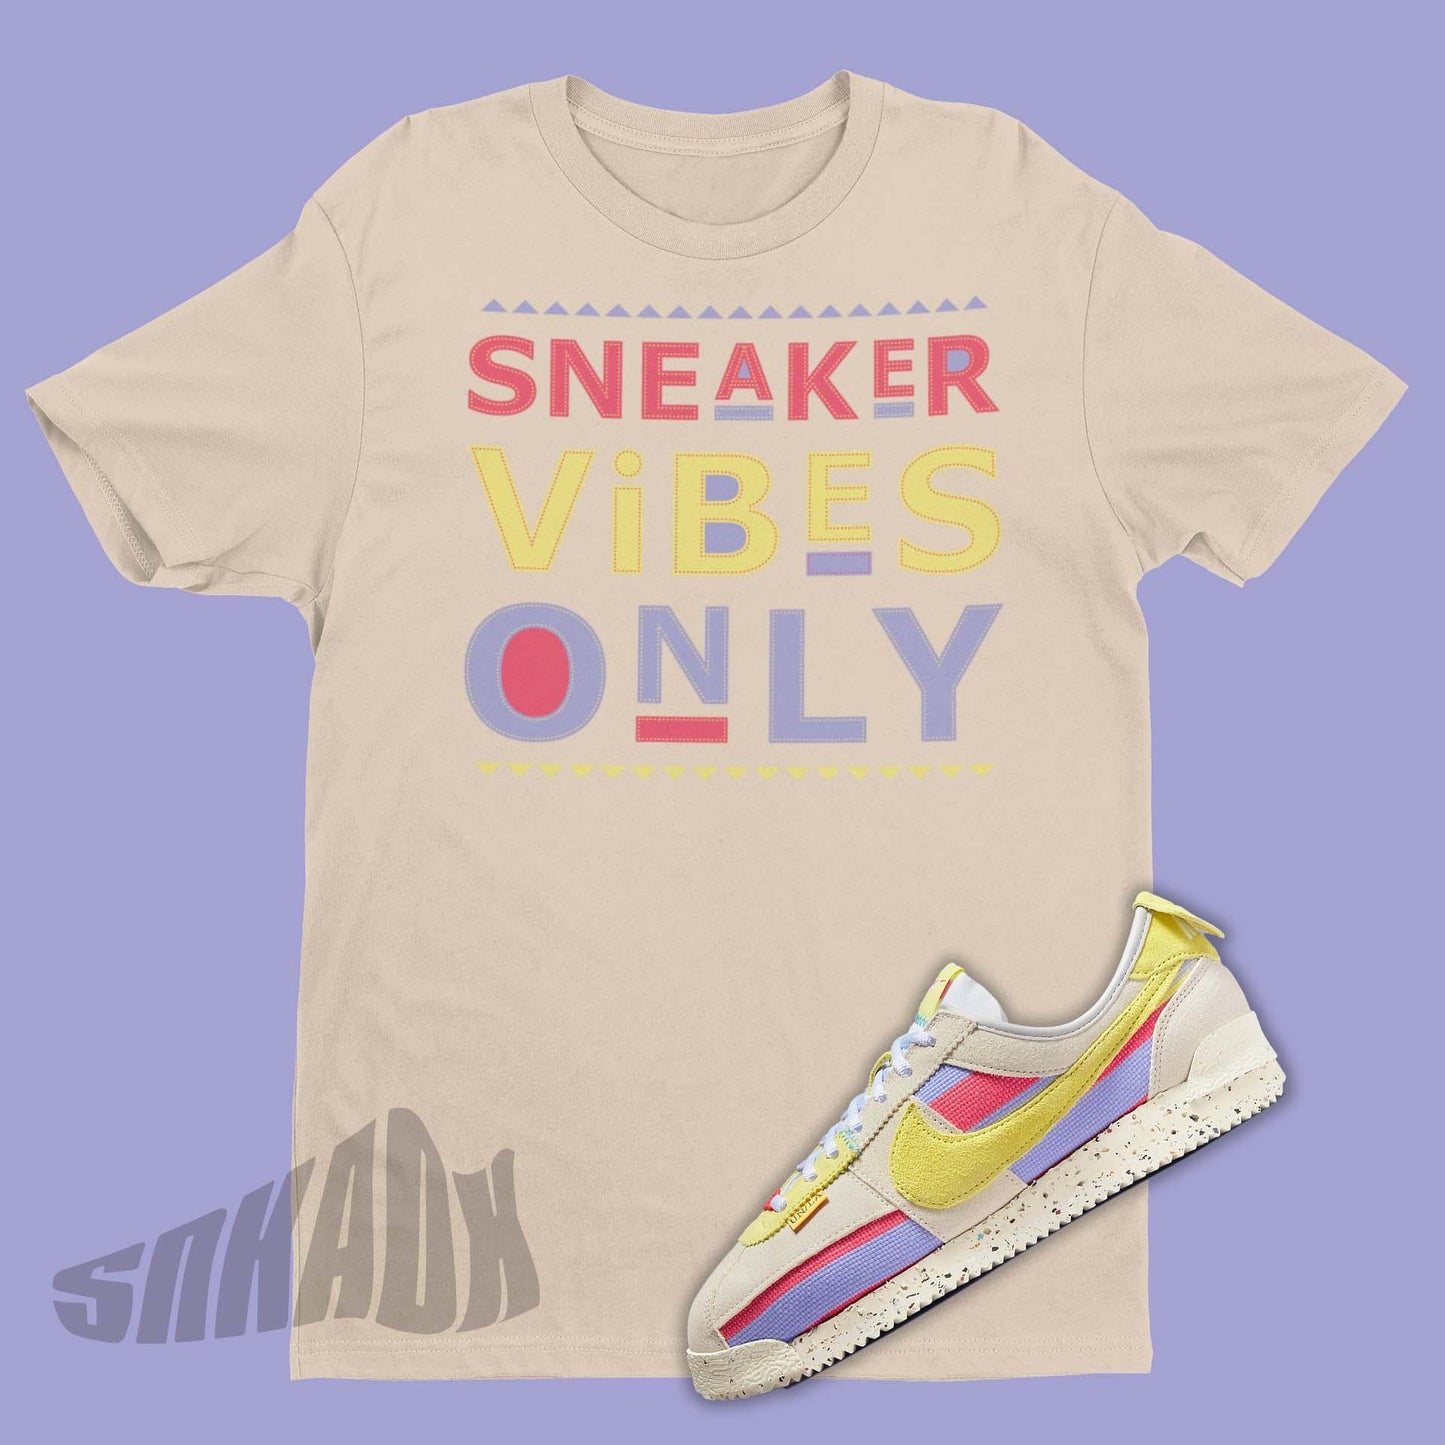 Sneaker Vibes Only Shirt To Match Union LA Nike Cortez Lemon Frost